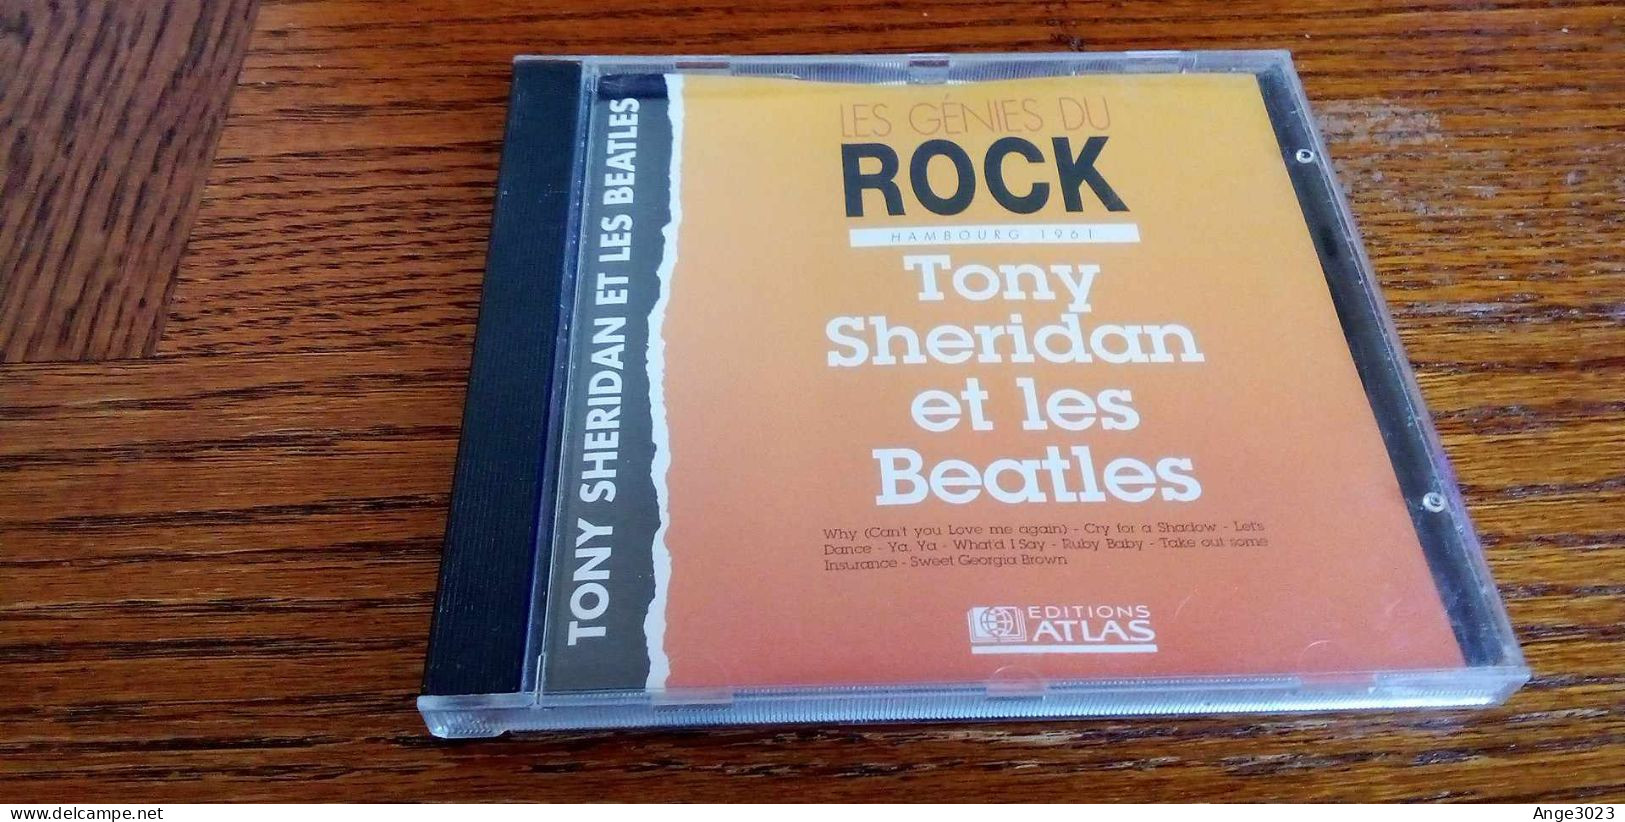 TONY SHERIDAN ET LES BEATLES "Les Genies Du Rock" - Rock